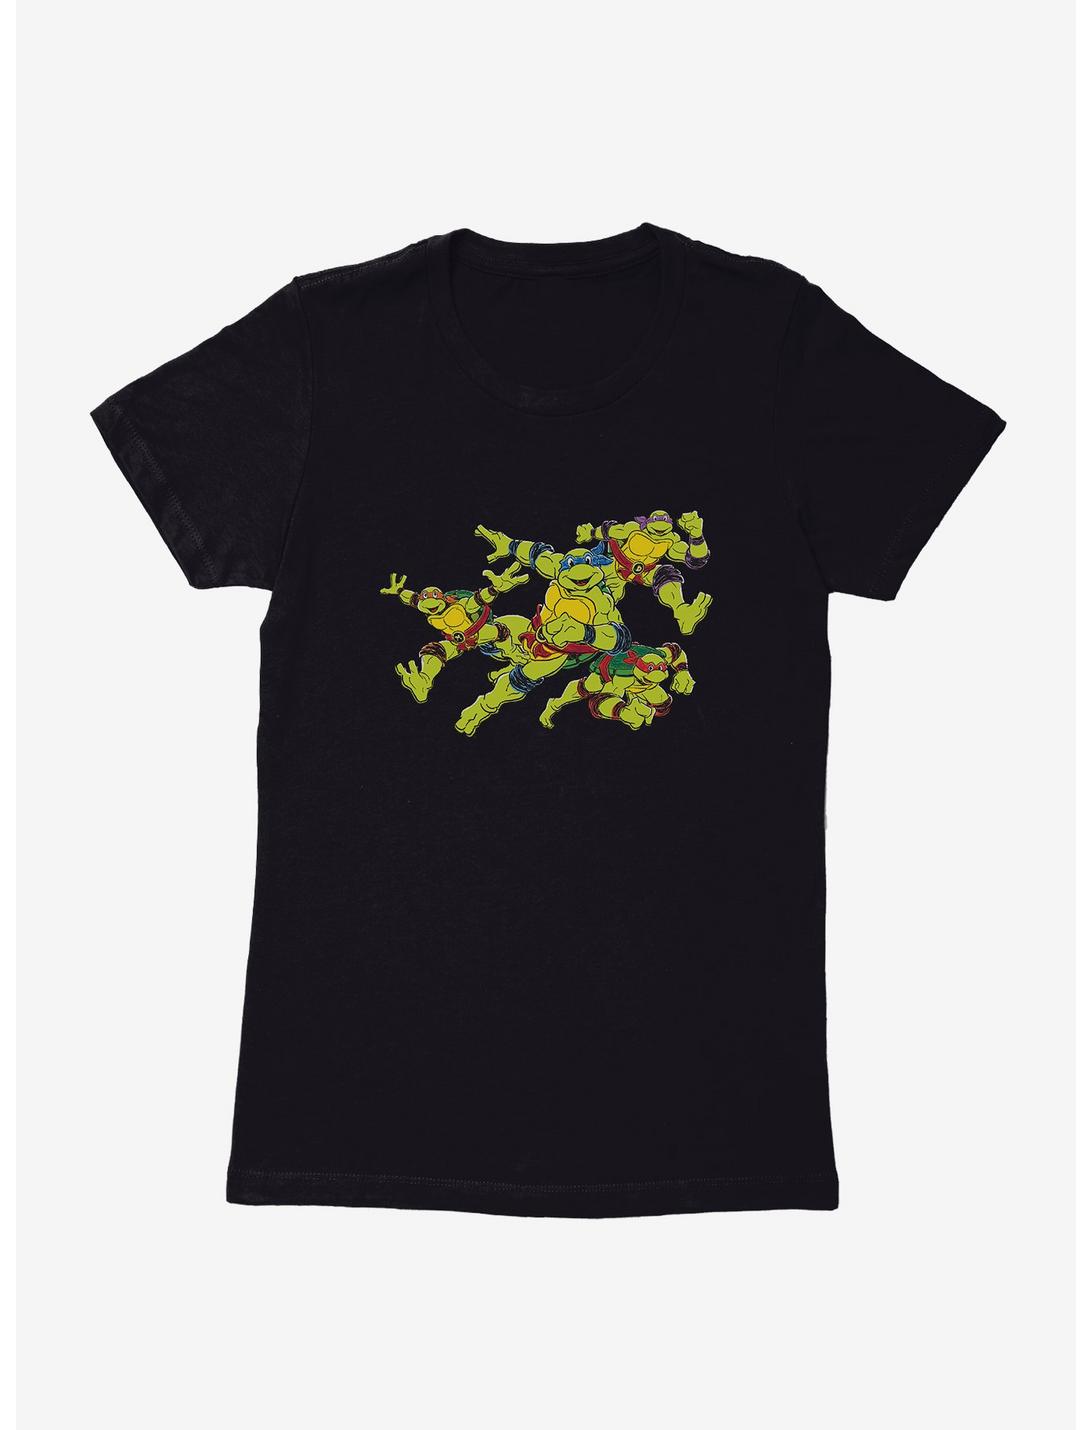 Teenage Mutant Ninja Turtles Group Action Poses Womens T-Shirt, BLACK, hi-res